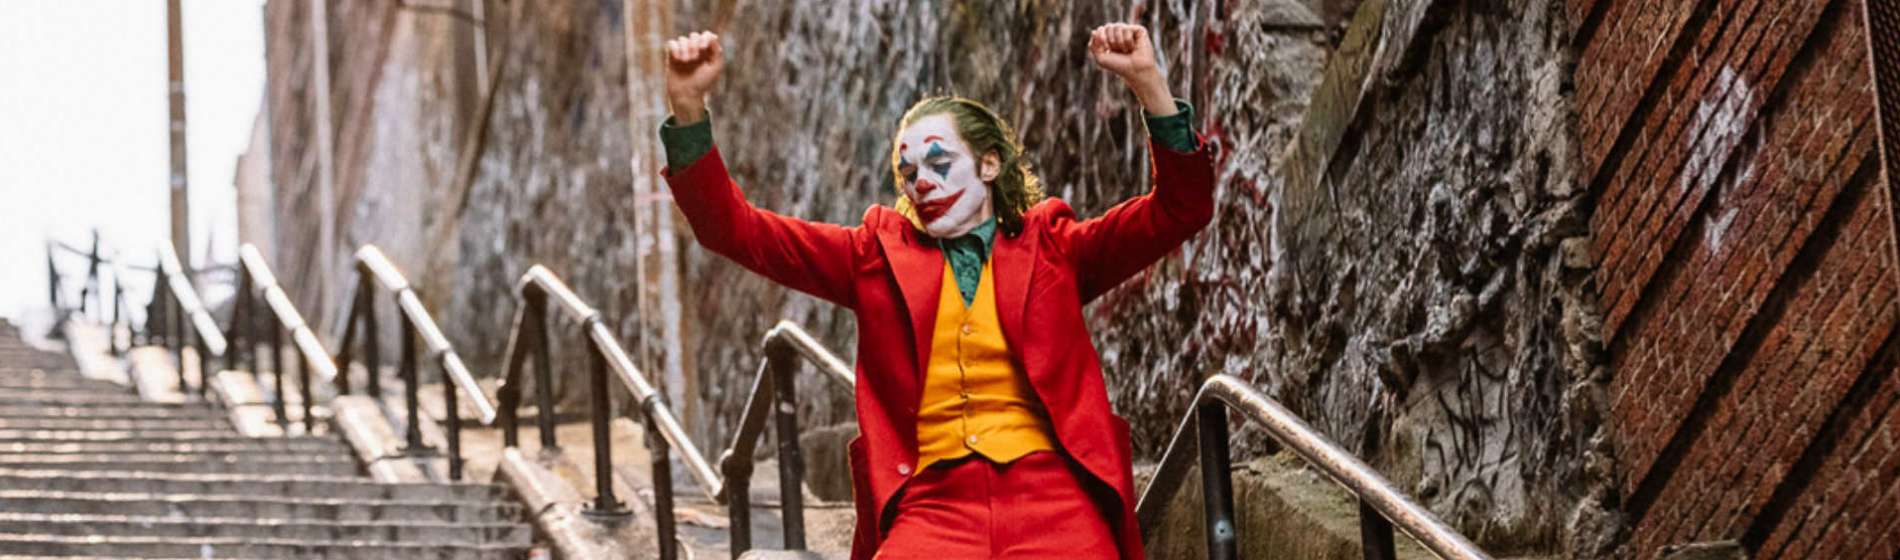 TIFF 2019: Joker Review